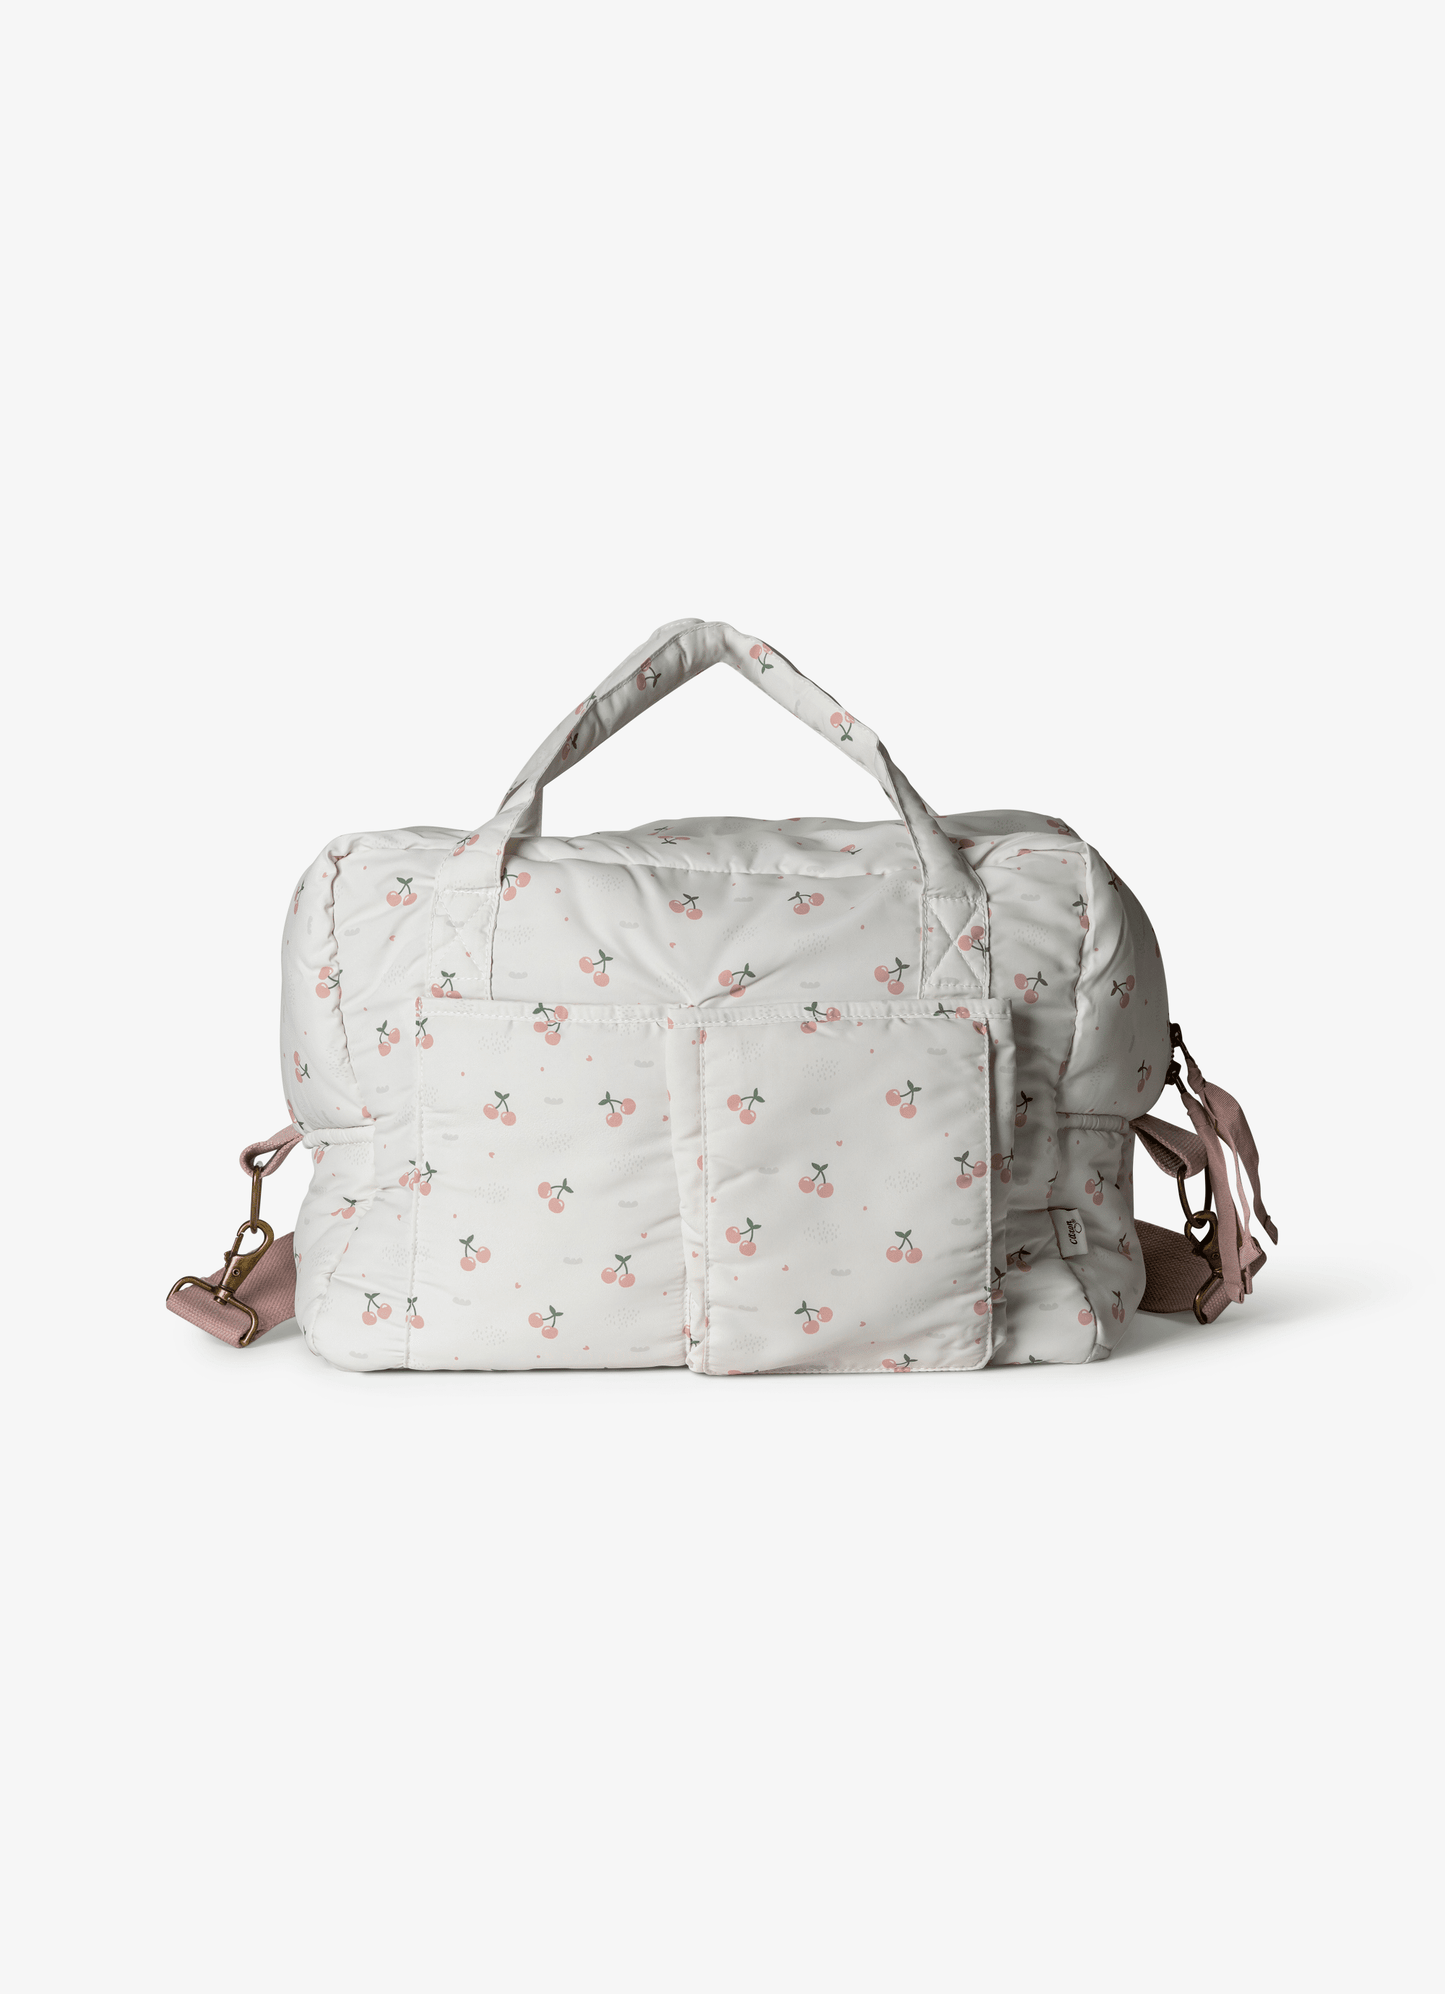 Multi Purpose Bag - Cherry